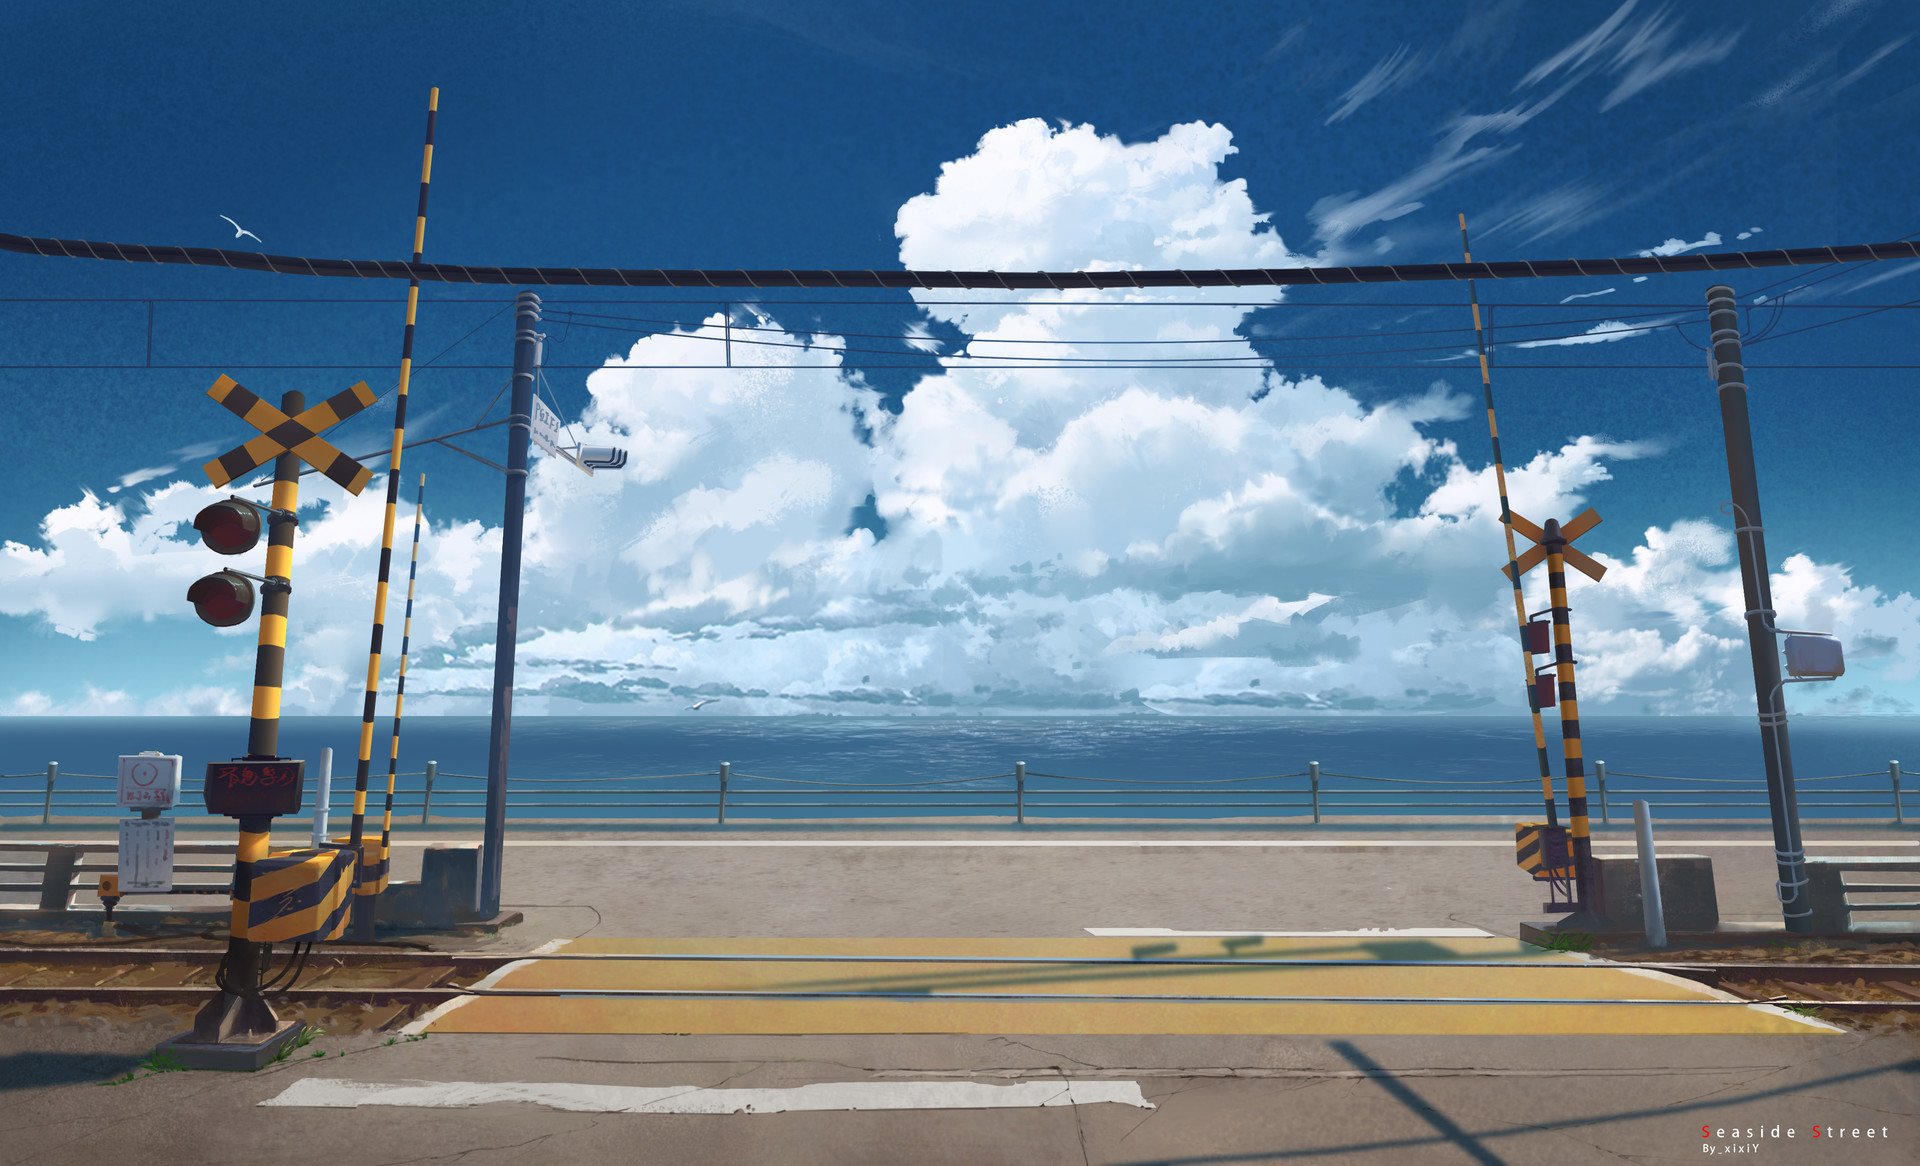 Digital Art Fantasy Art Environment Landscape Clouds Ocean View Z 4 Zero 1920x1166